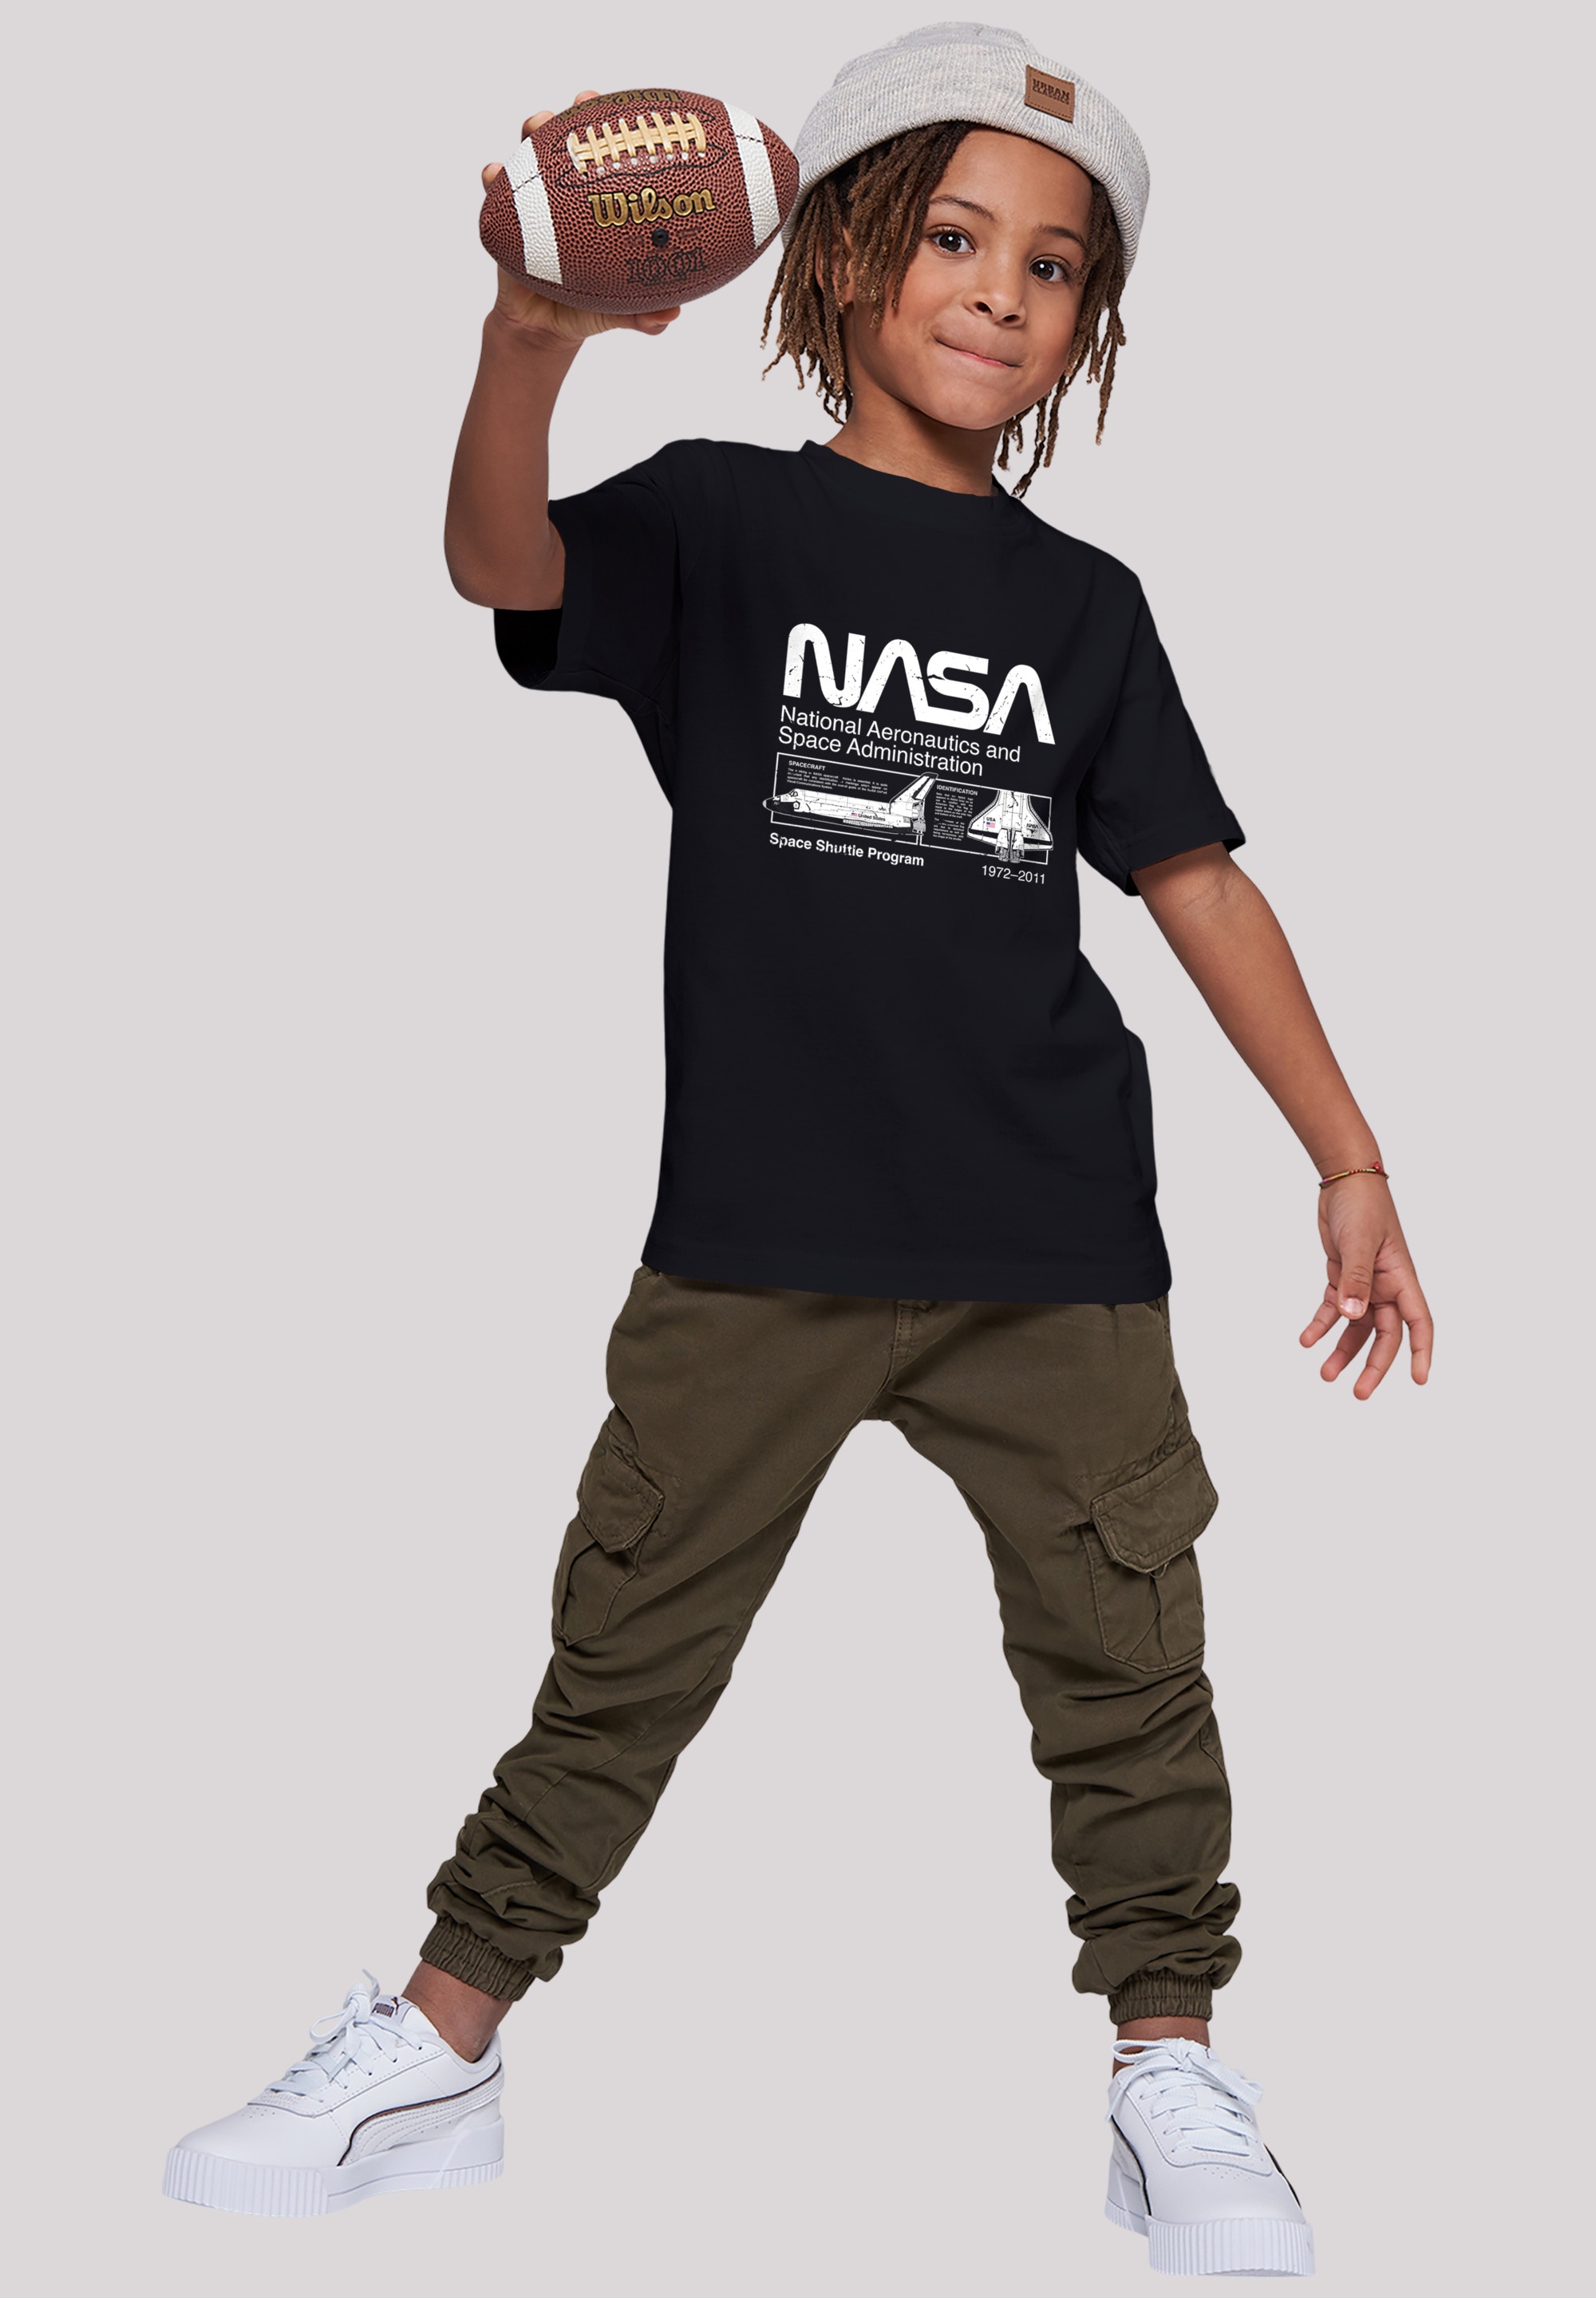 Unisex Kinder,Premium Classic T-Shirt | Black«, Black Space F4NT4STIC Merch,Jungen,Mädchen,Bedruckt Shuttle »NASA BAUR Friday